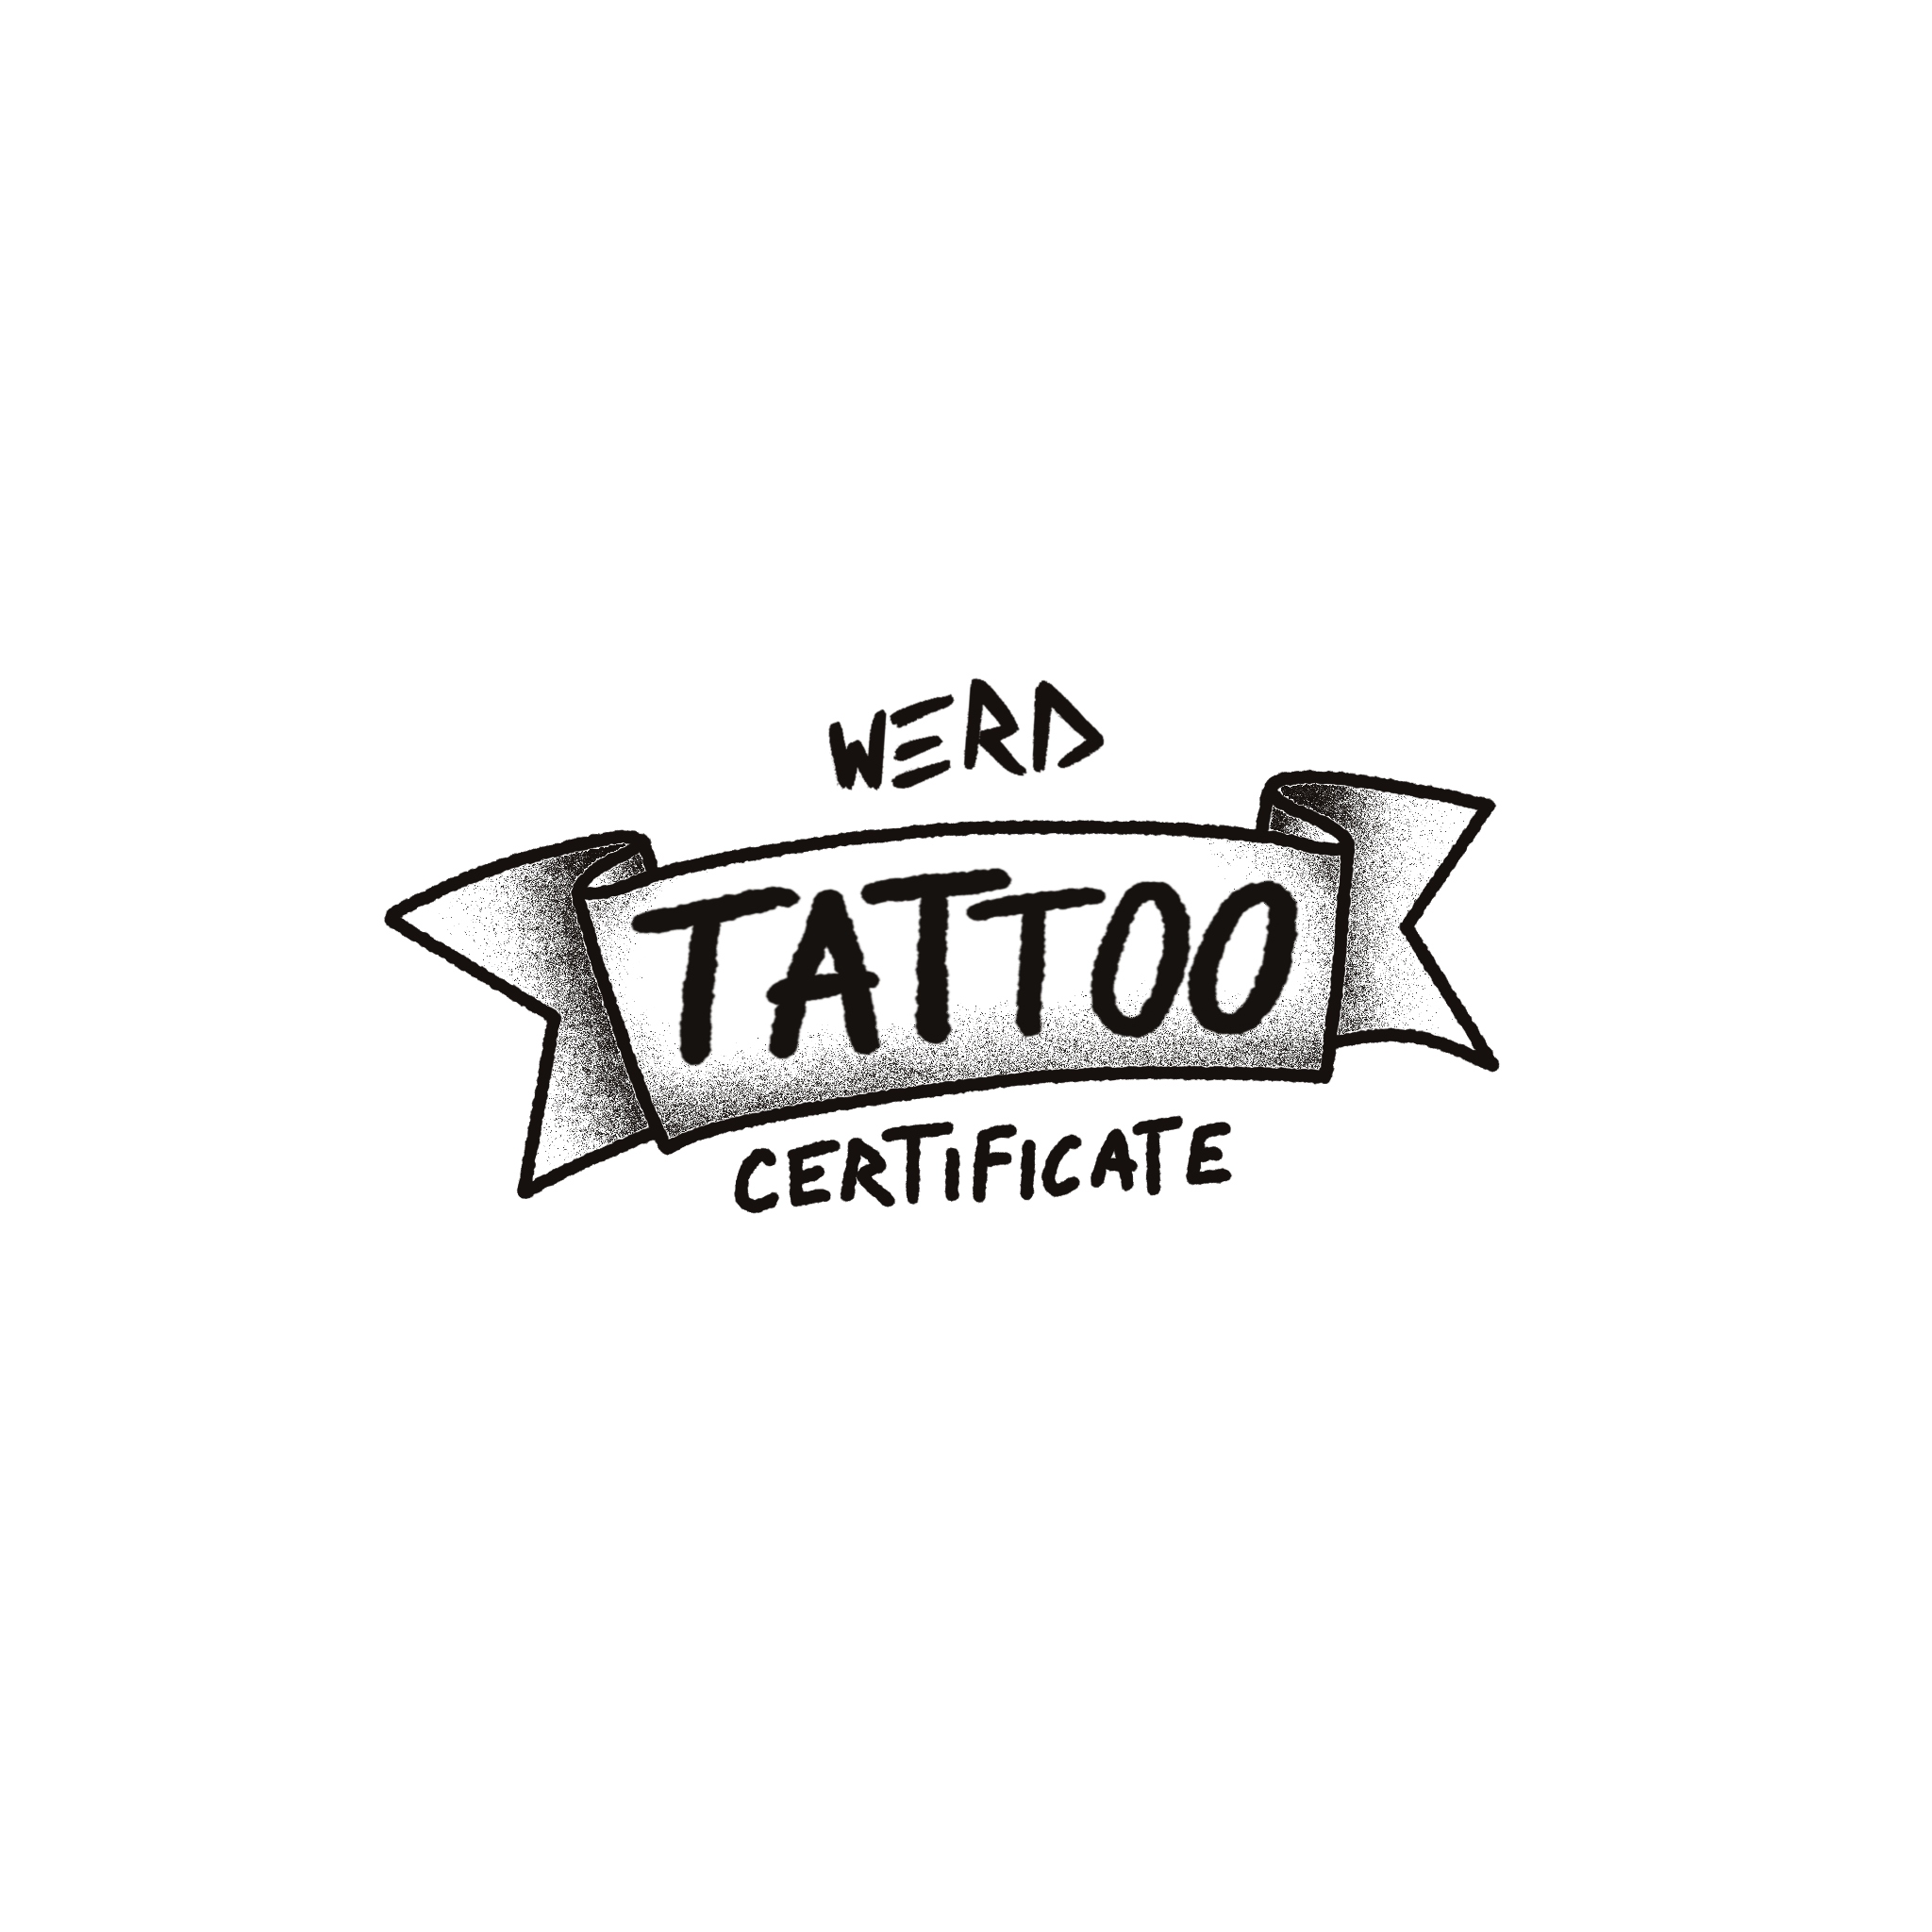 Ragtime Tattoo Certificate :: Behance